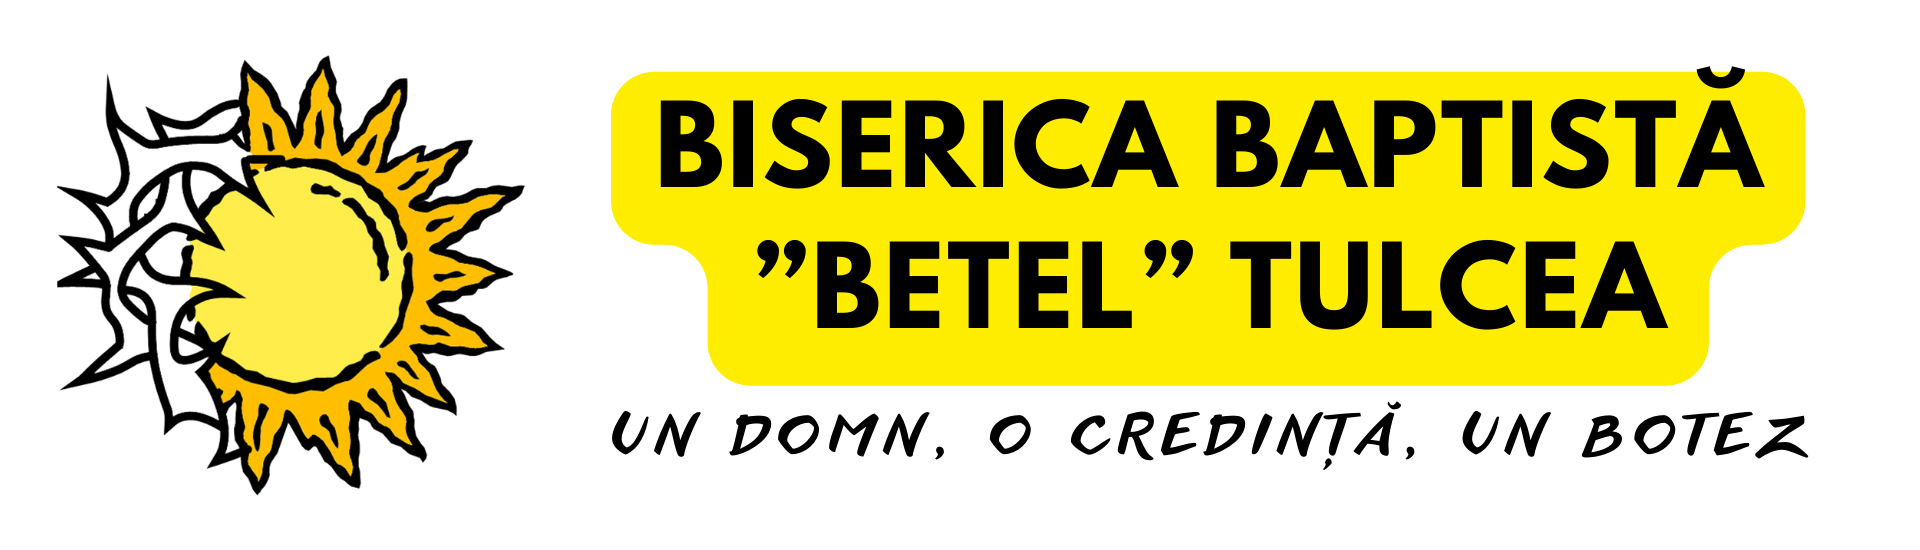 BISERICA BETEL